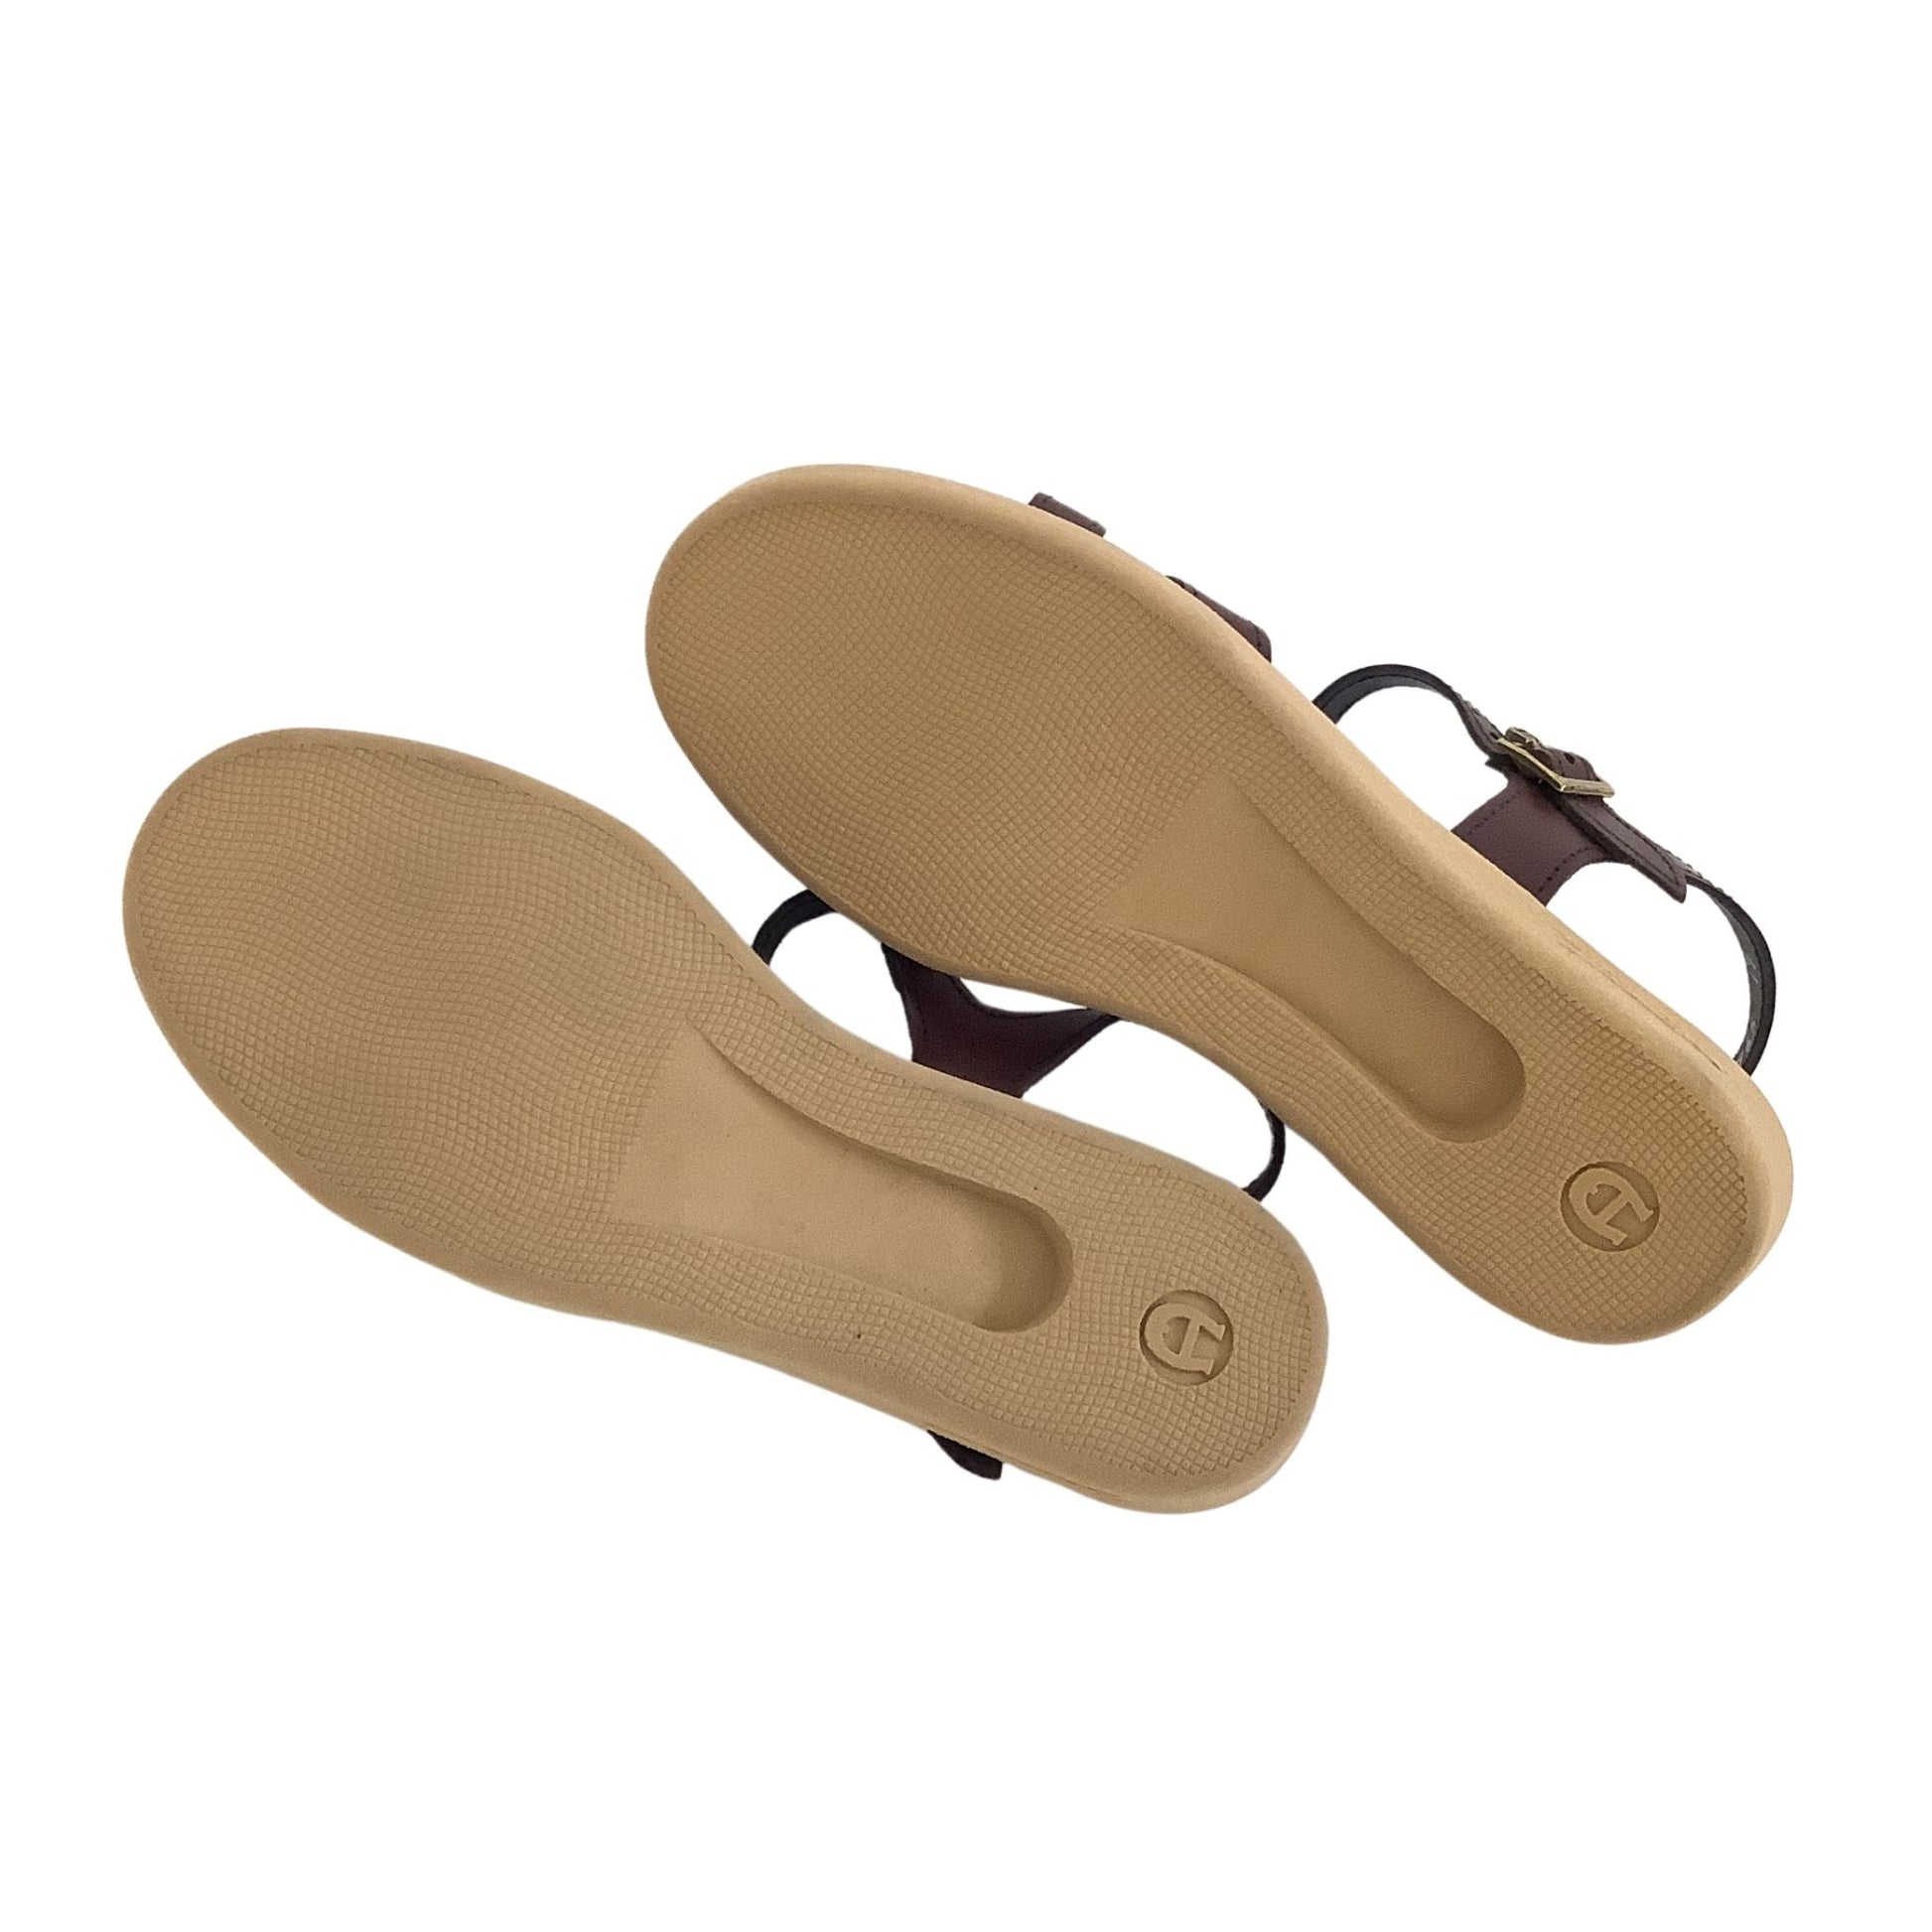 Oxblood Flat Aigner Sandals 6-M / Oxblood / Classic